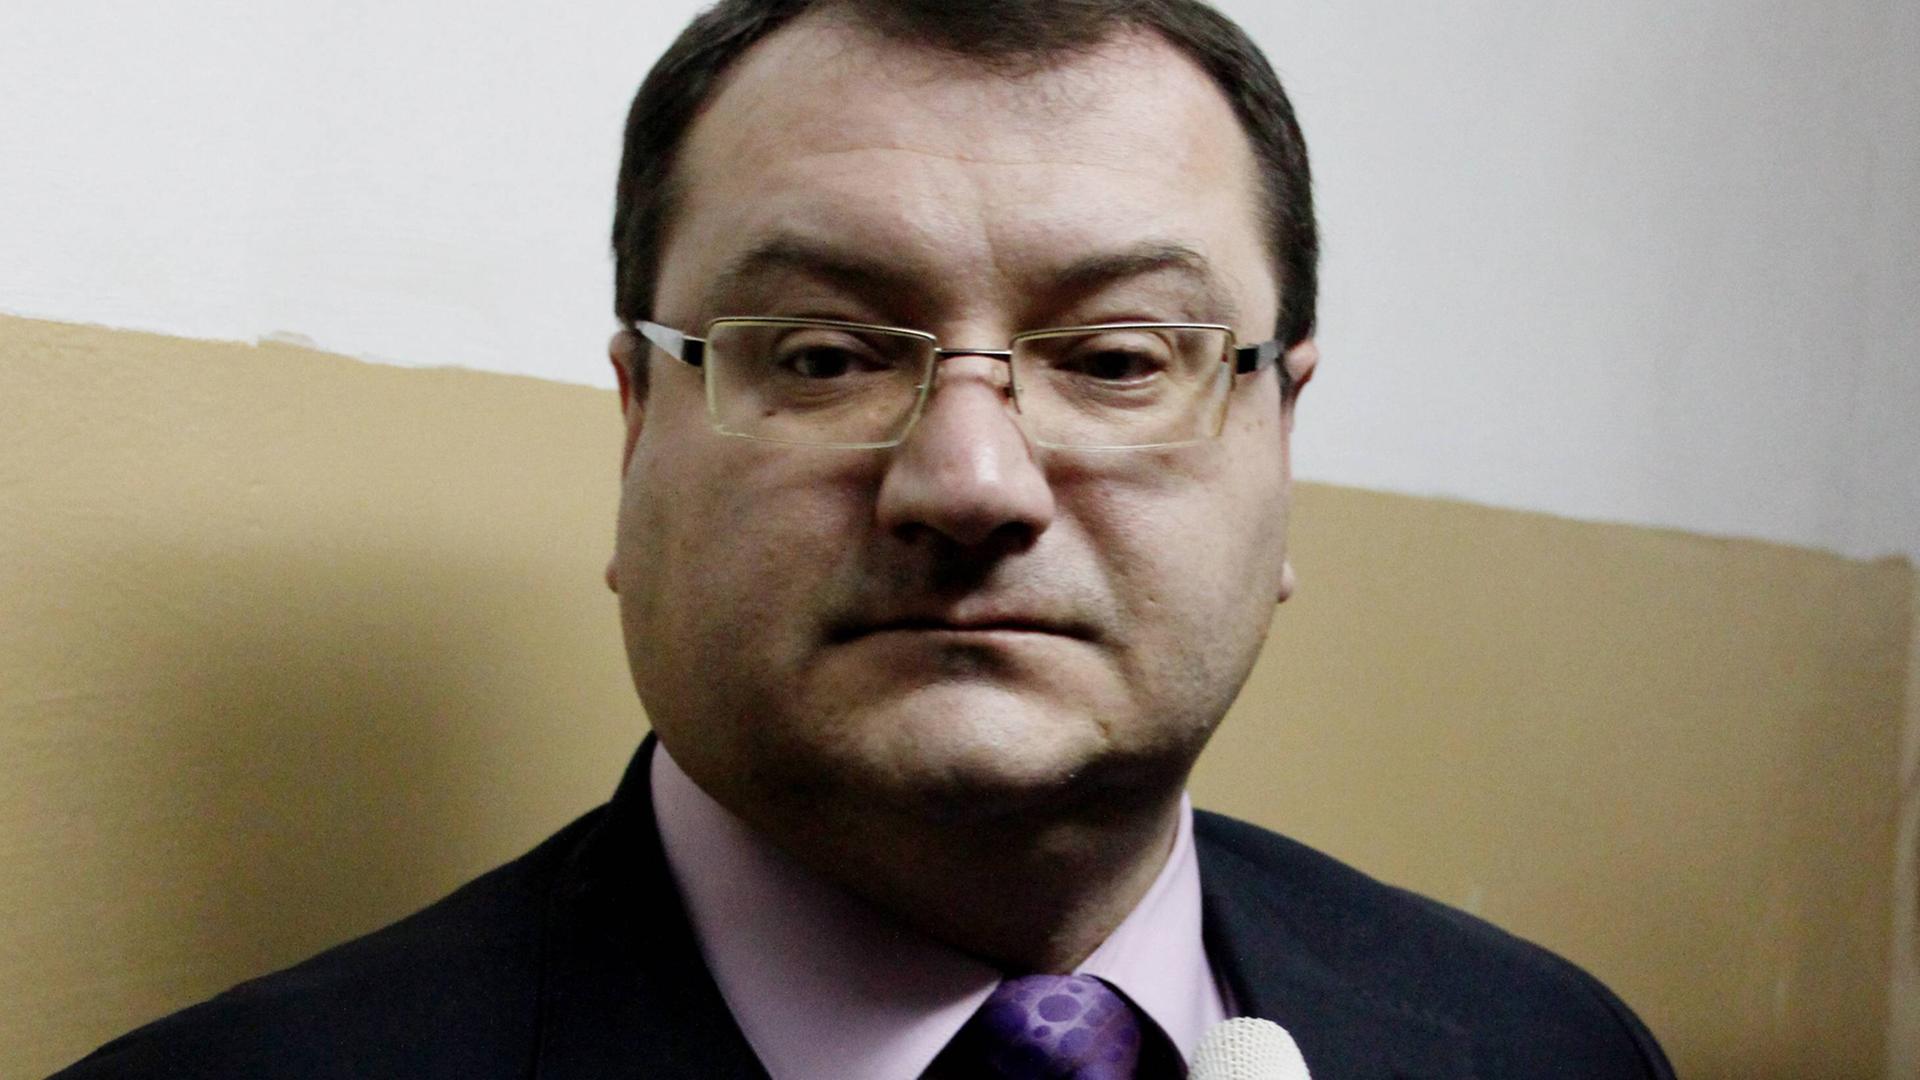 Rechtsanwalt Juri Grabowski im März 2015